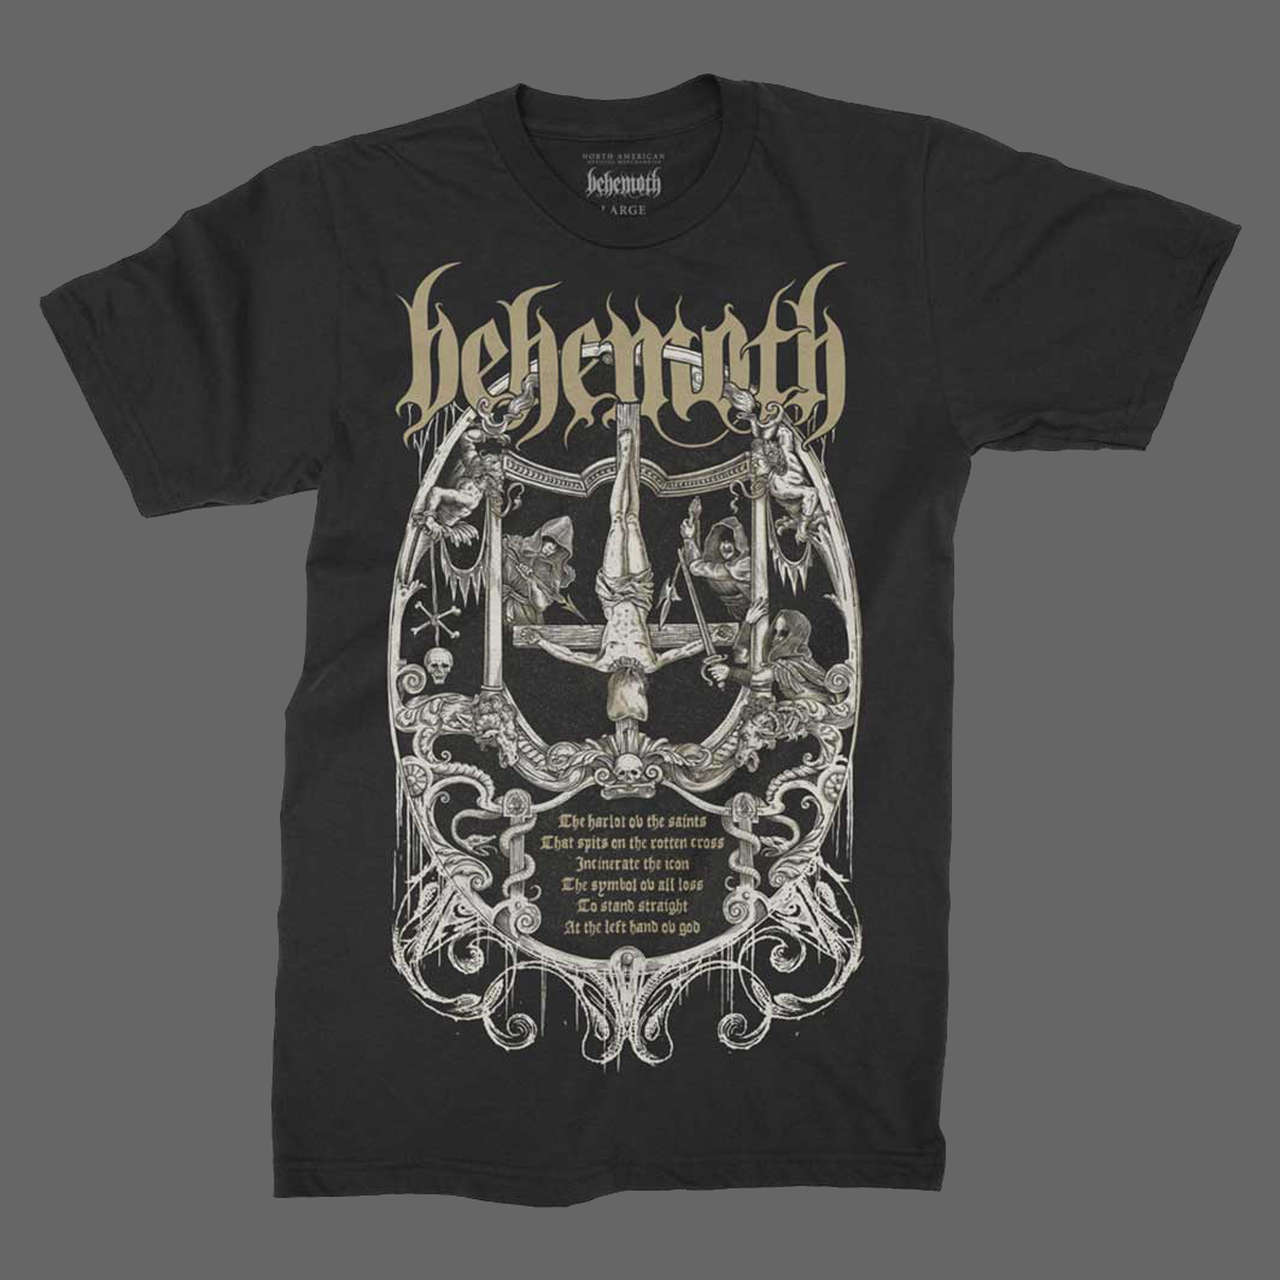 Behemoth - At the Left Hand ov God (T-Shirt)